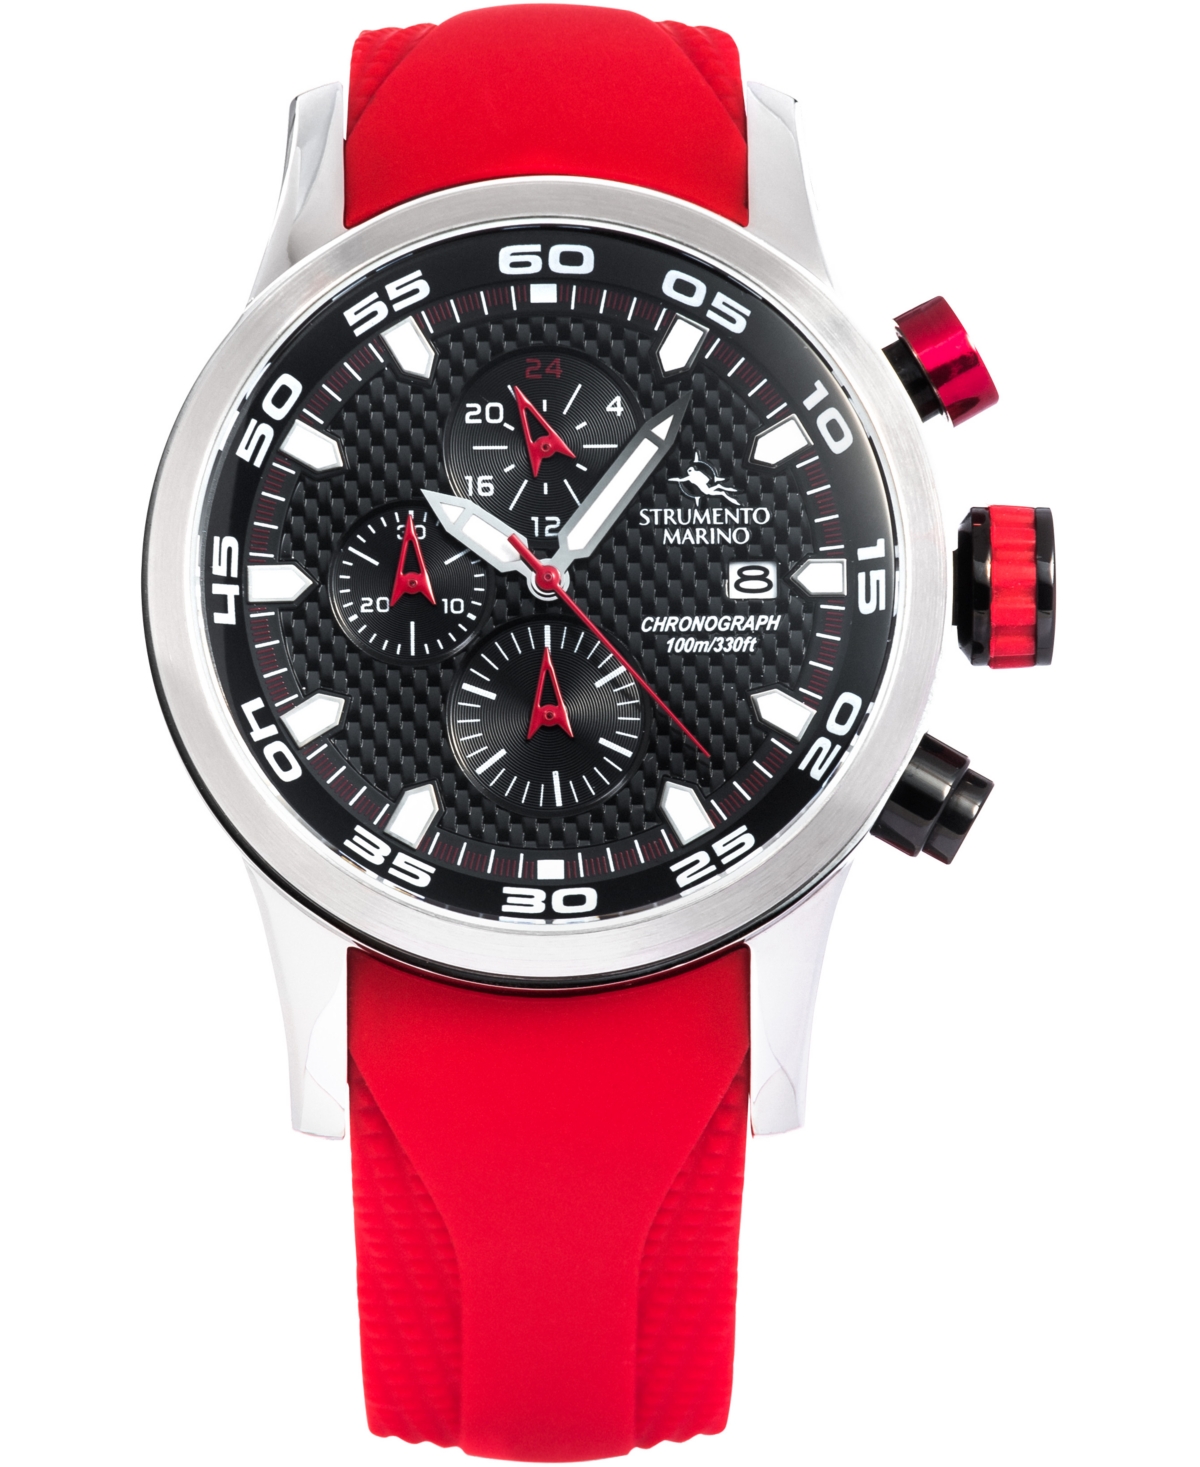 Men's Speedboat Red Silicone Performance Timepiece Watch 46mm - Red